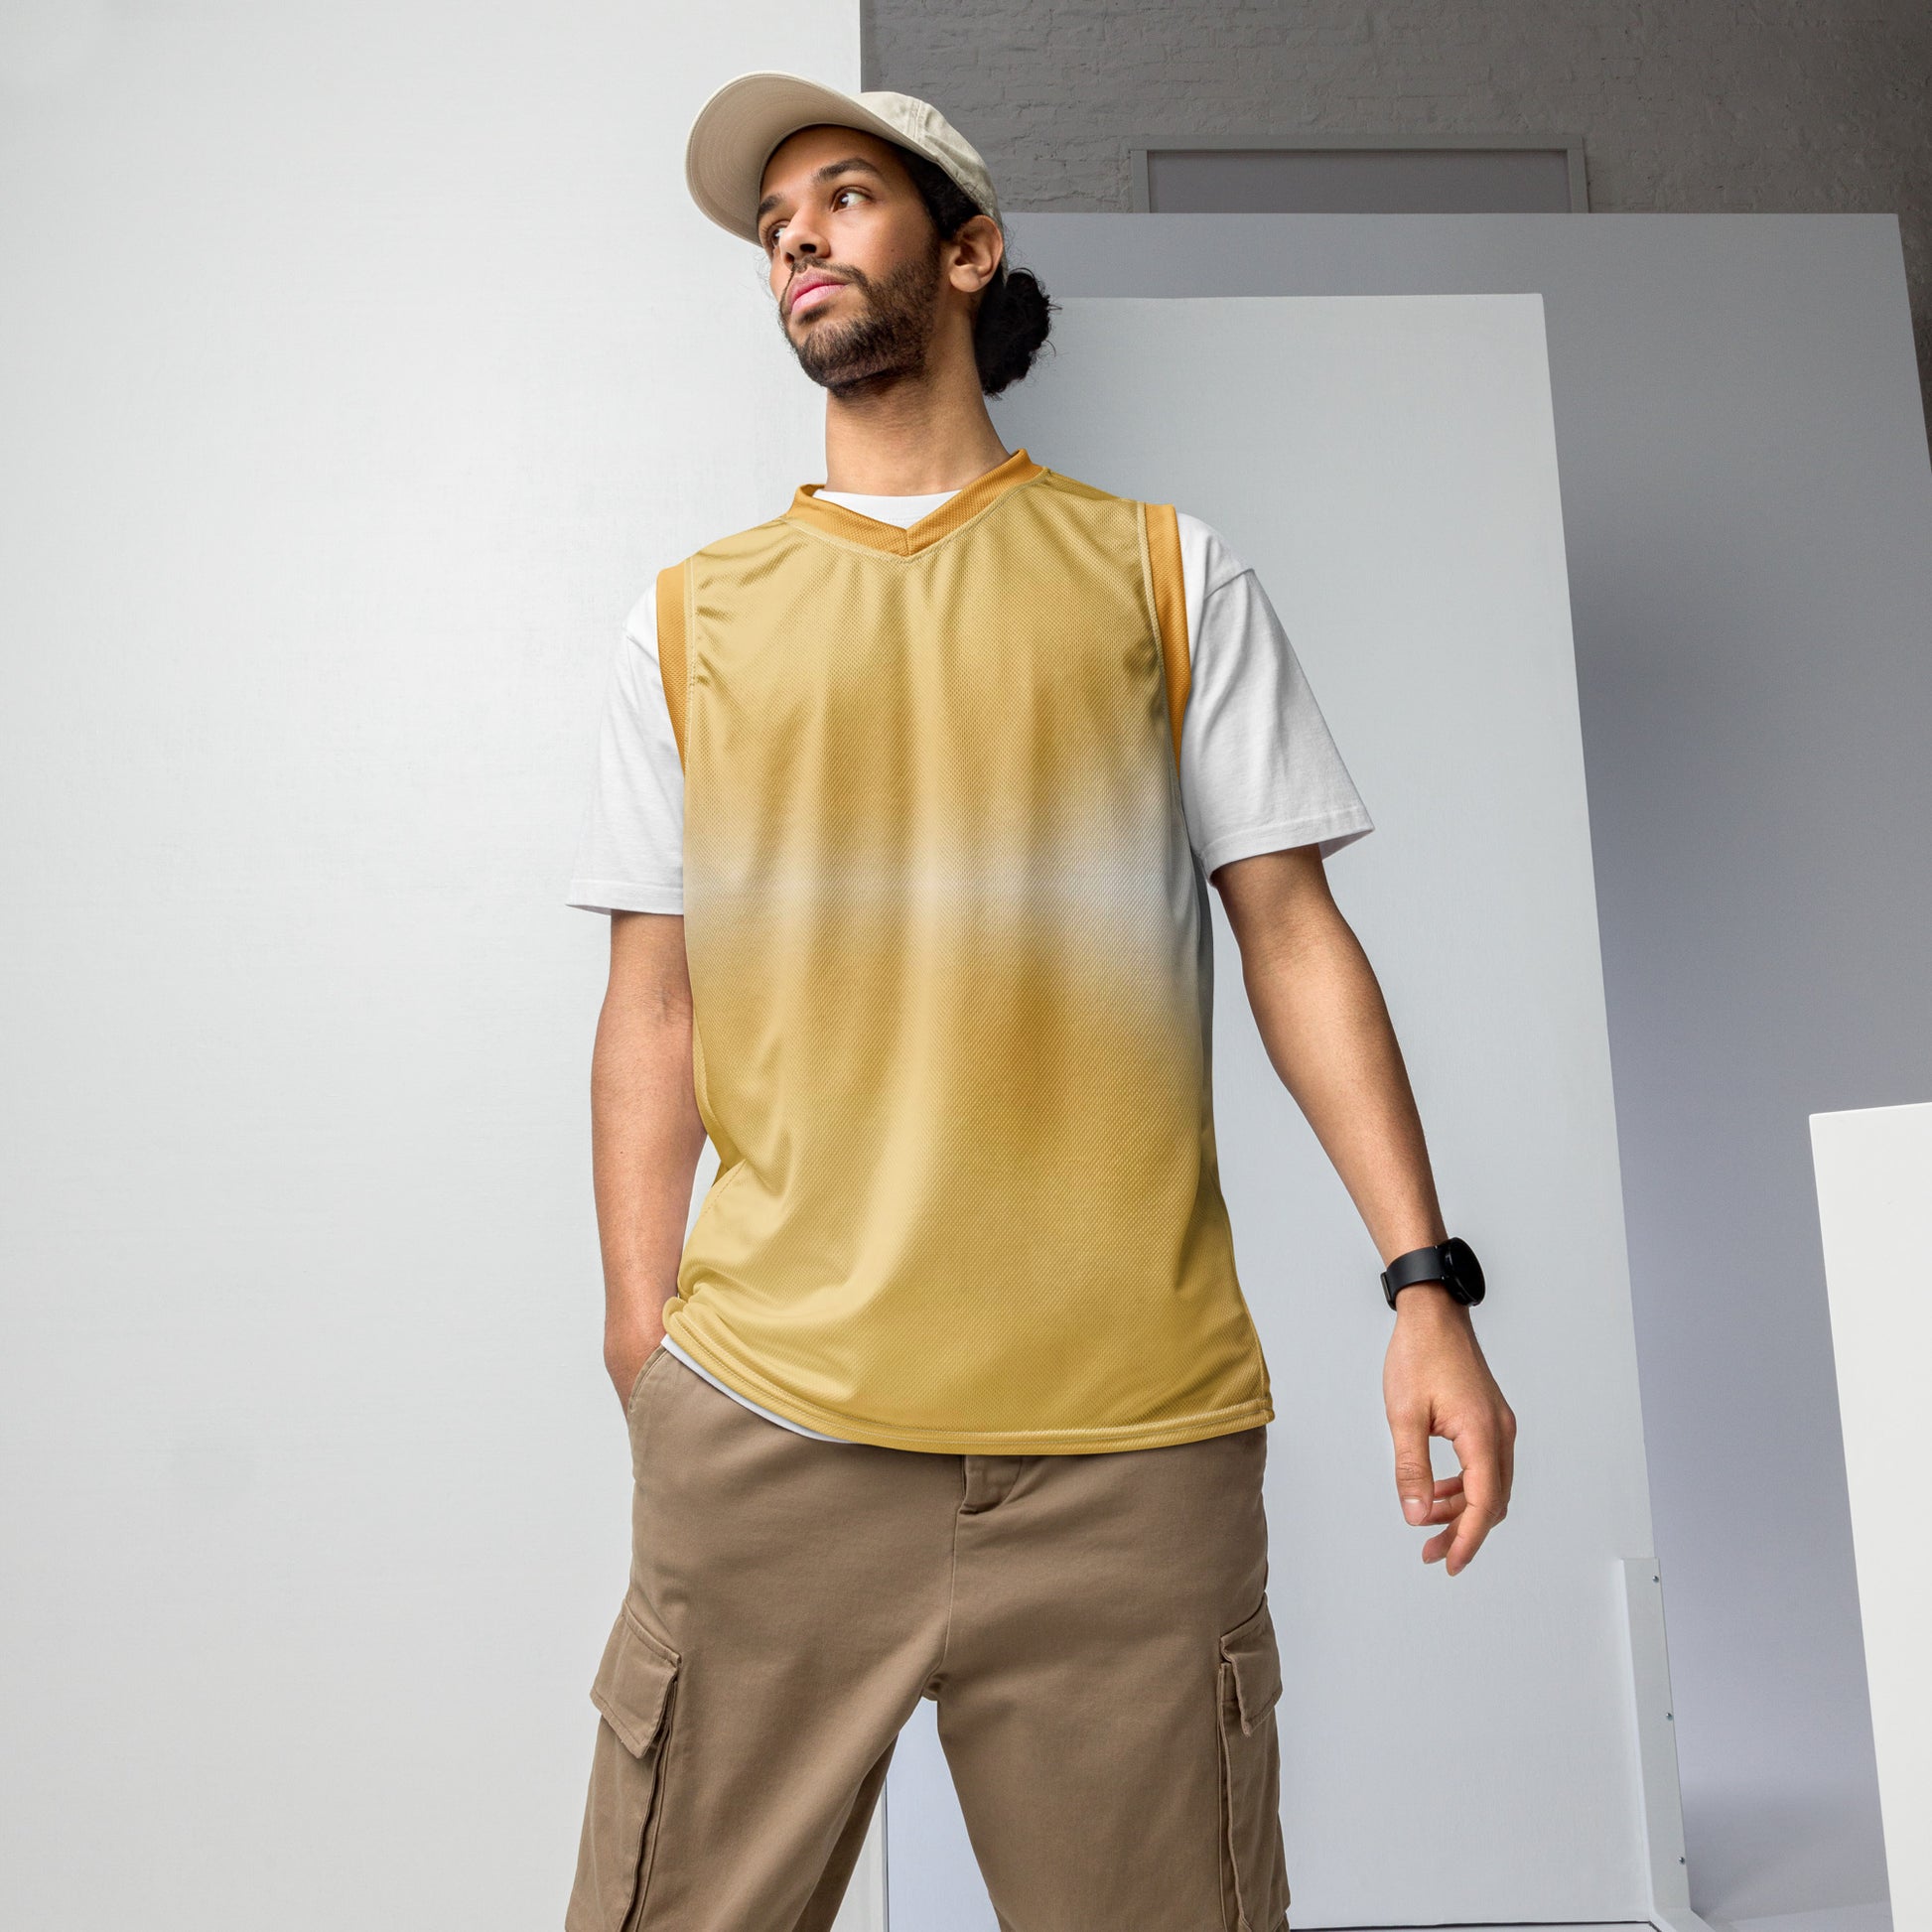 Humble Sportswear, men's color match tops, basketball jerseys for men